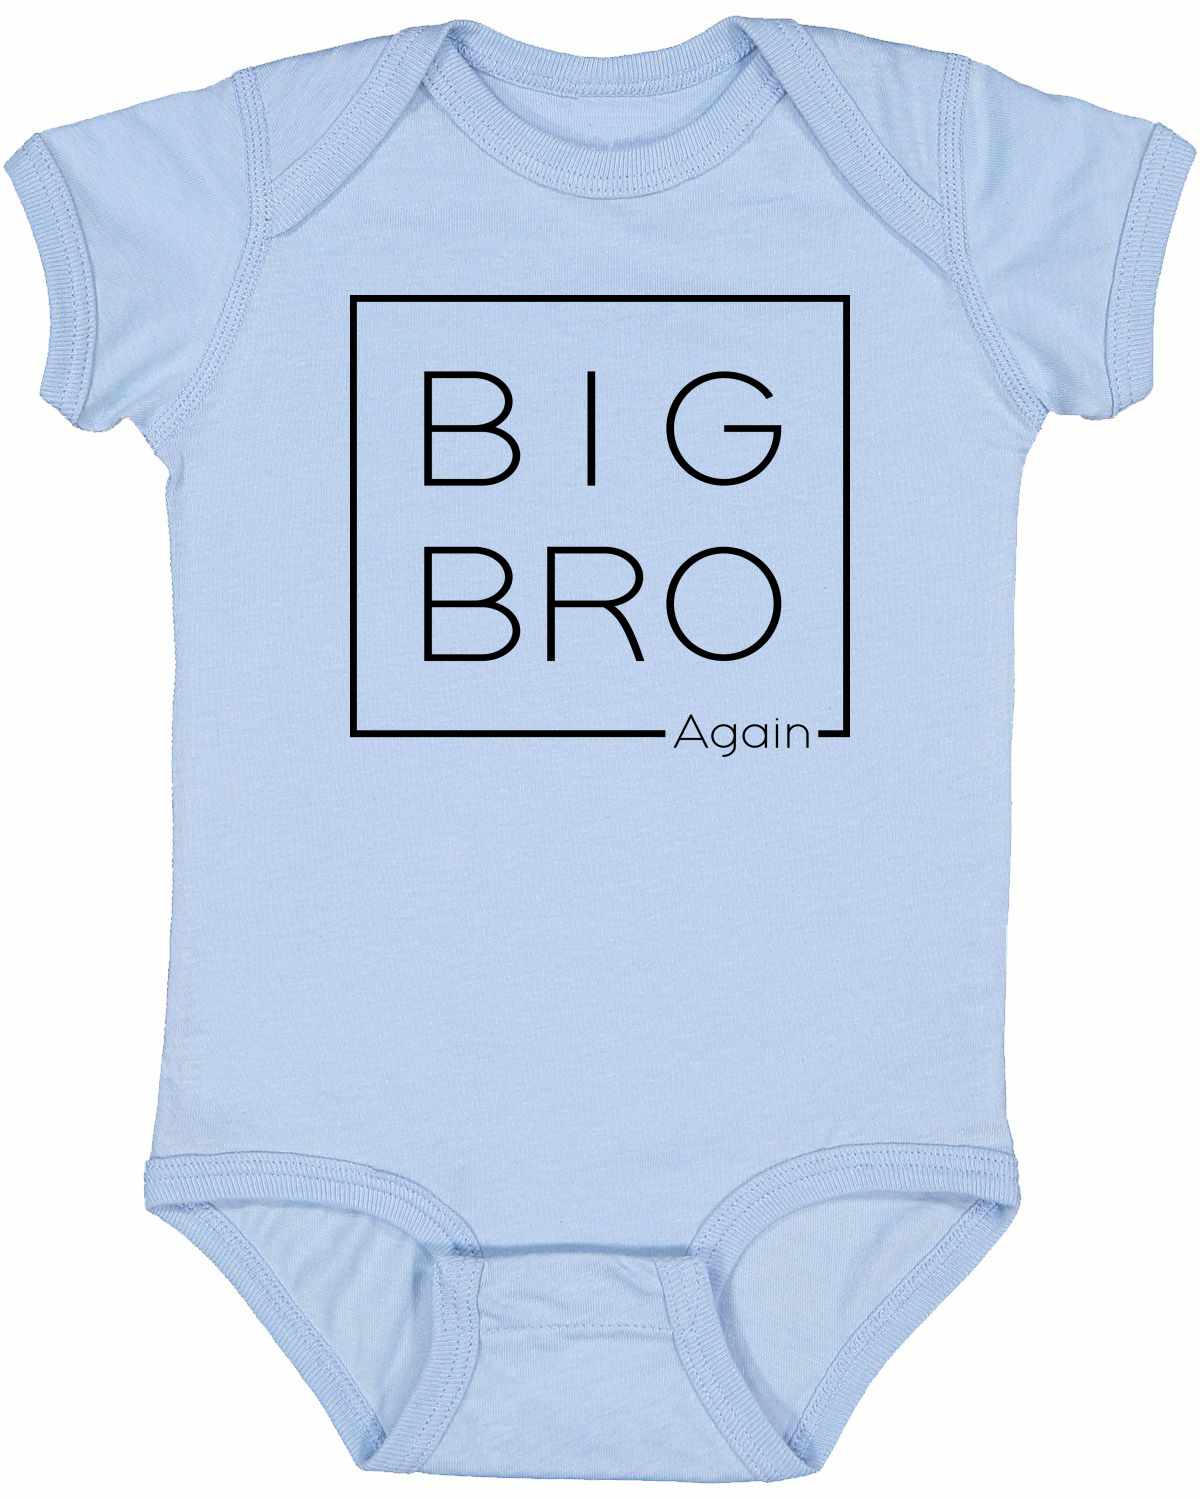 Big Bro Again- Big Brother Box on Infant BodySuit